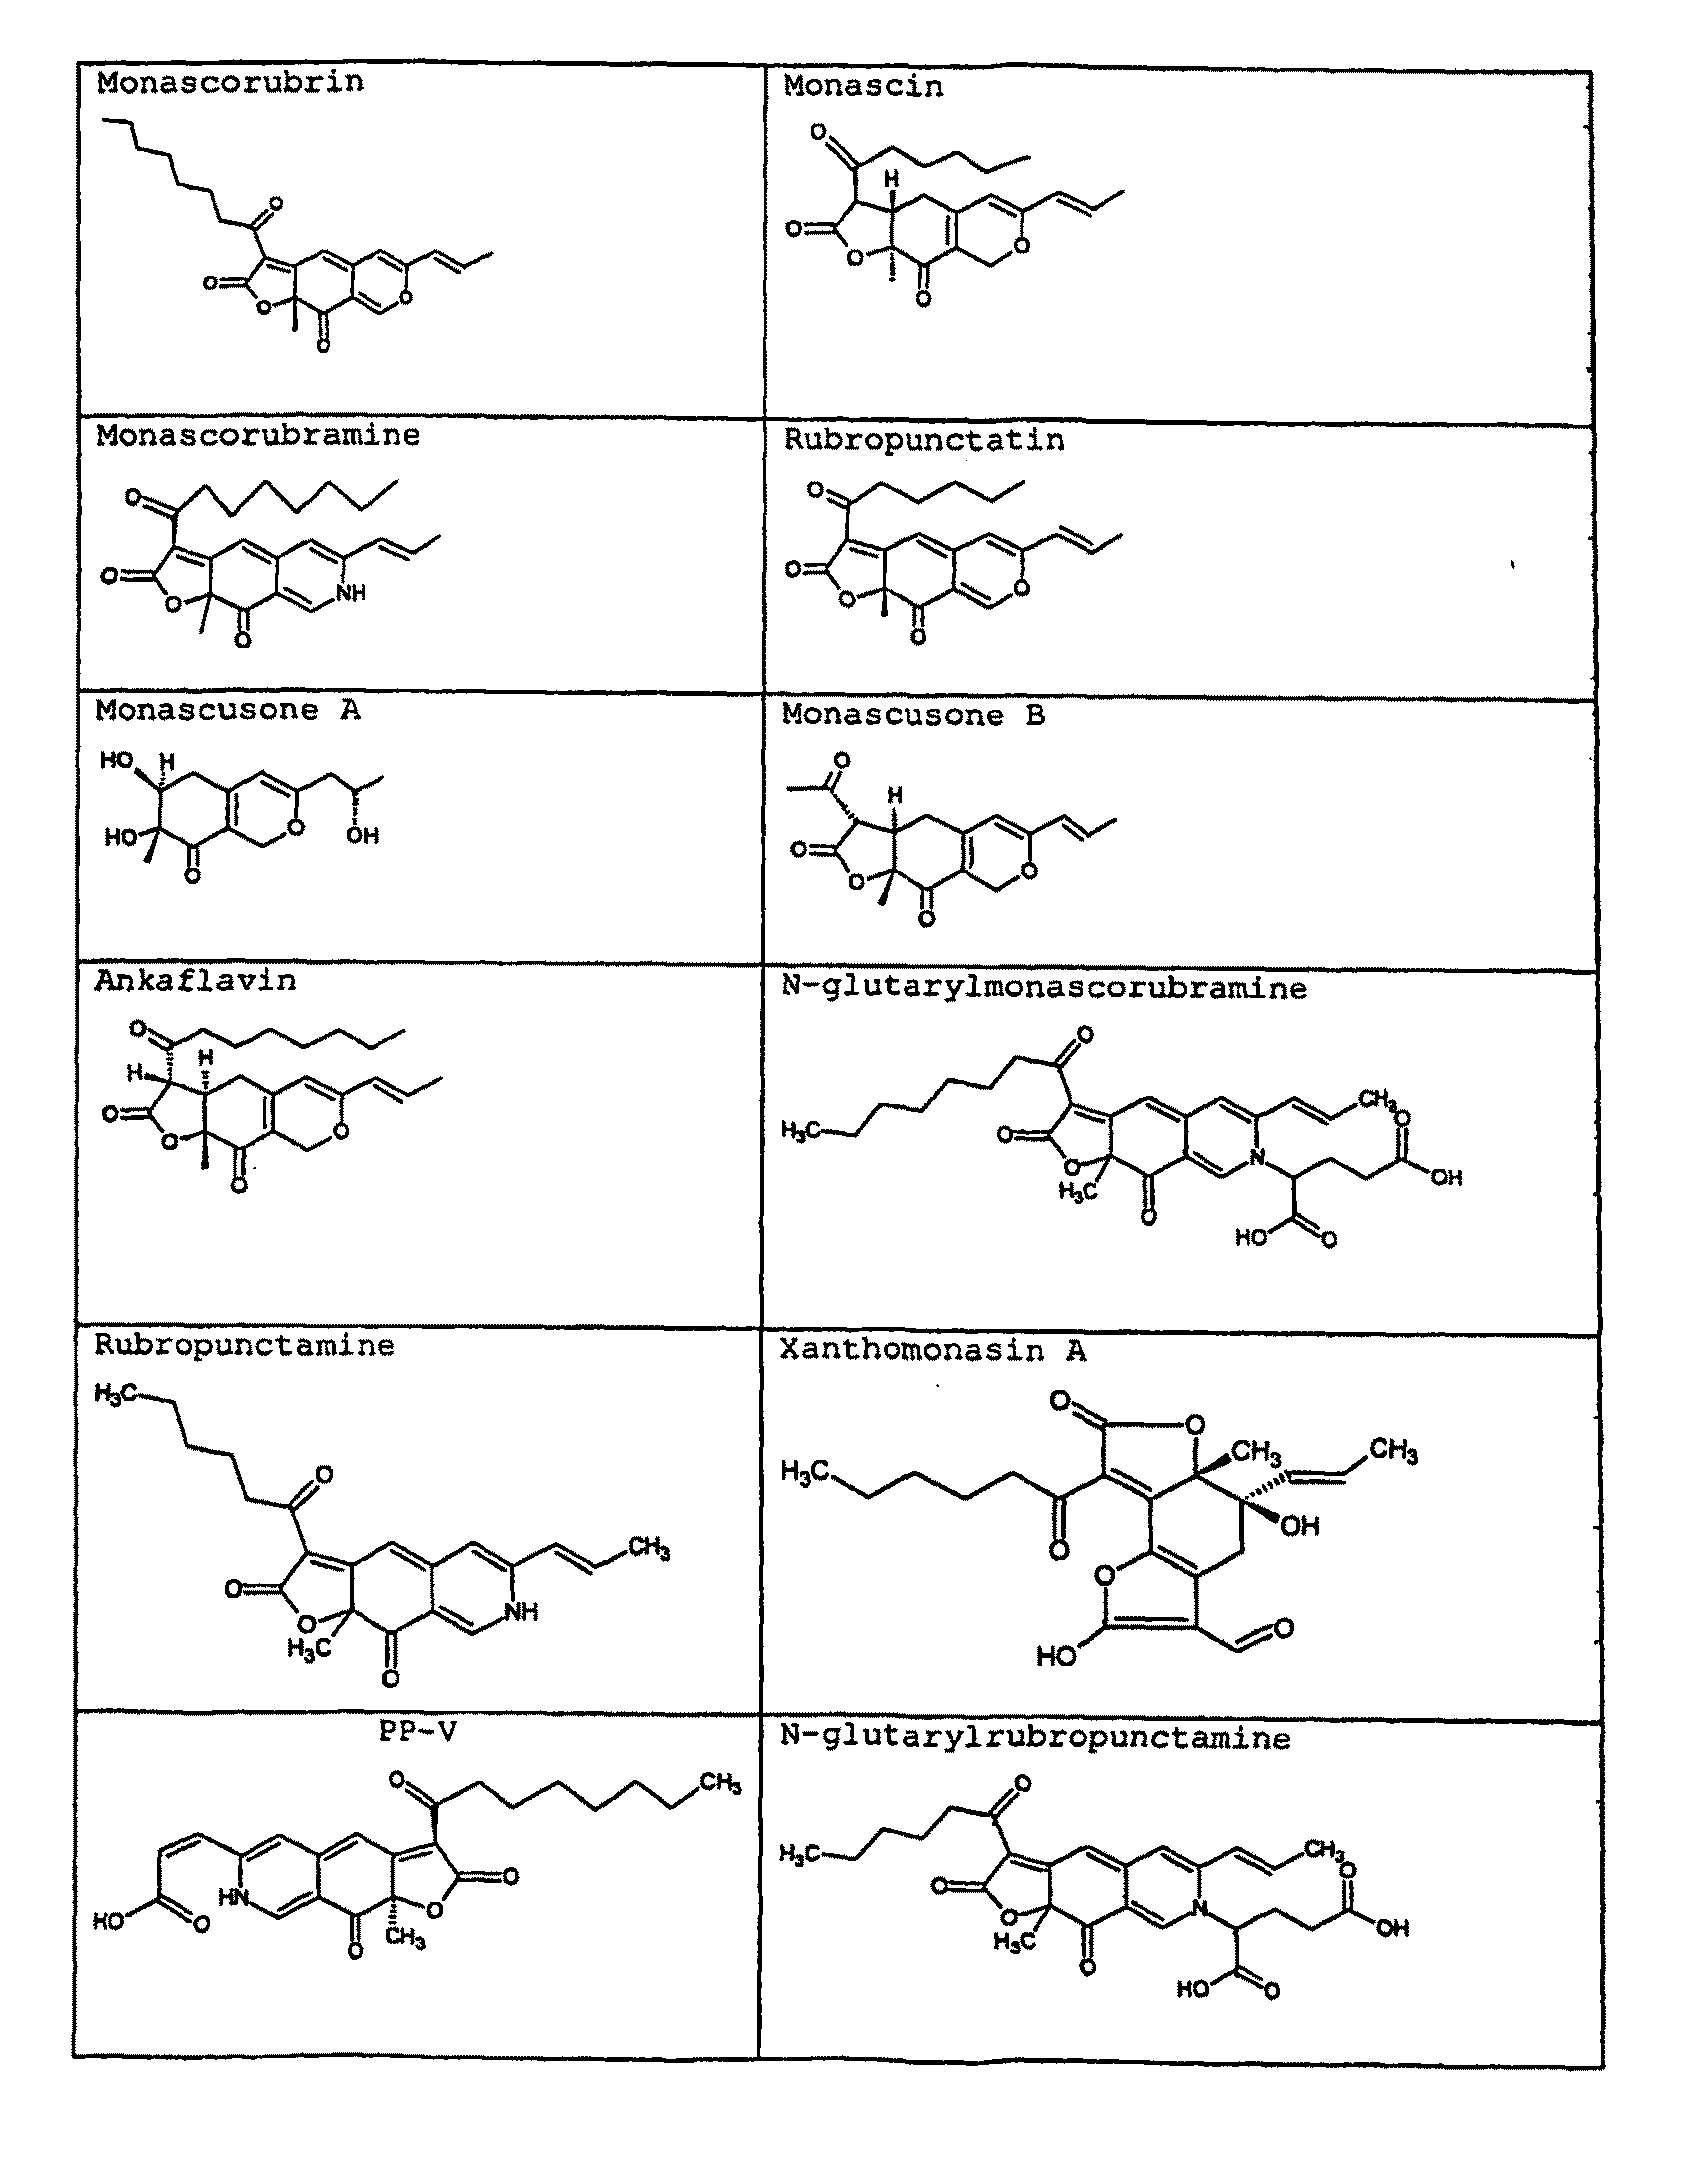 Production of monascus-like azaphilone pigment